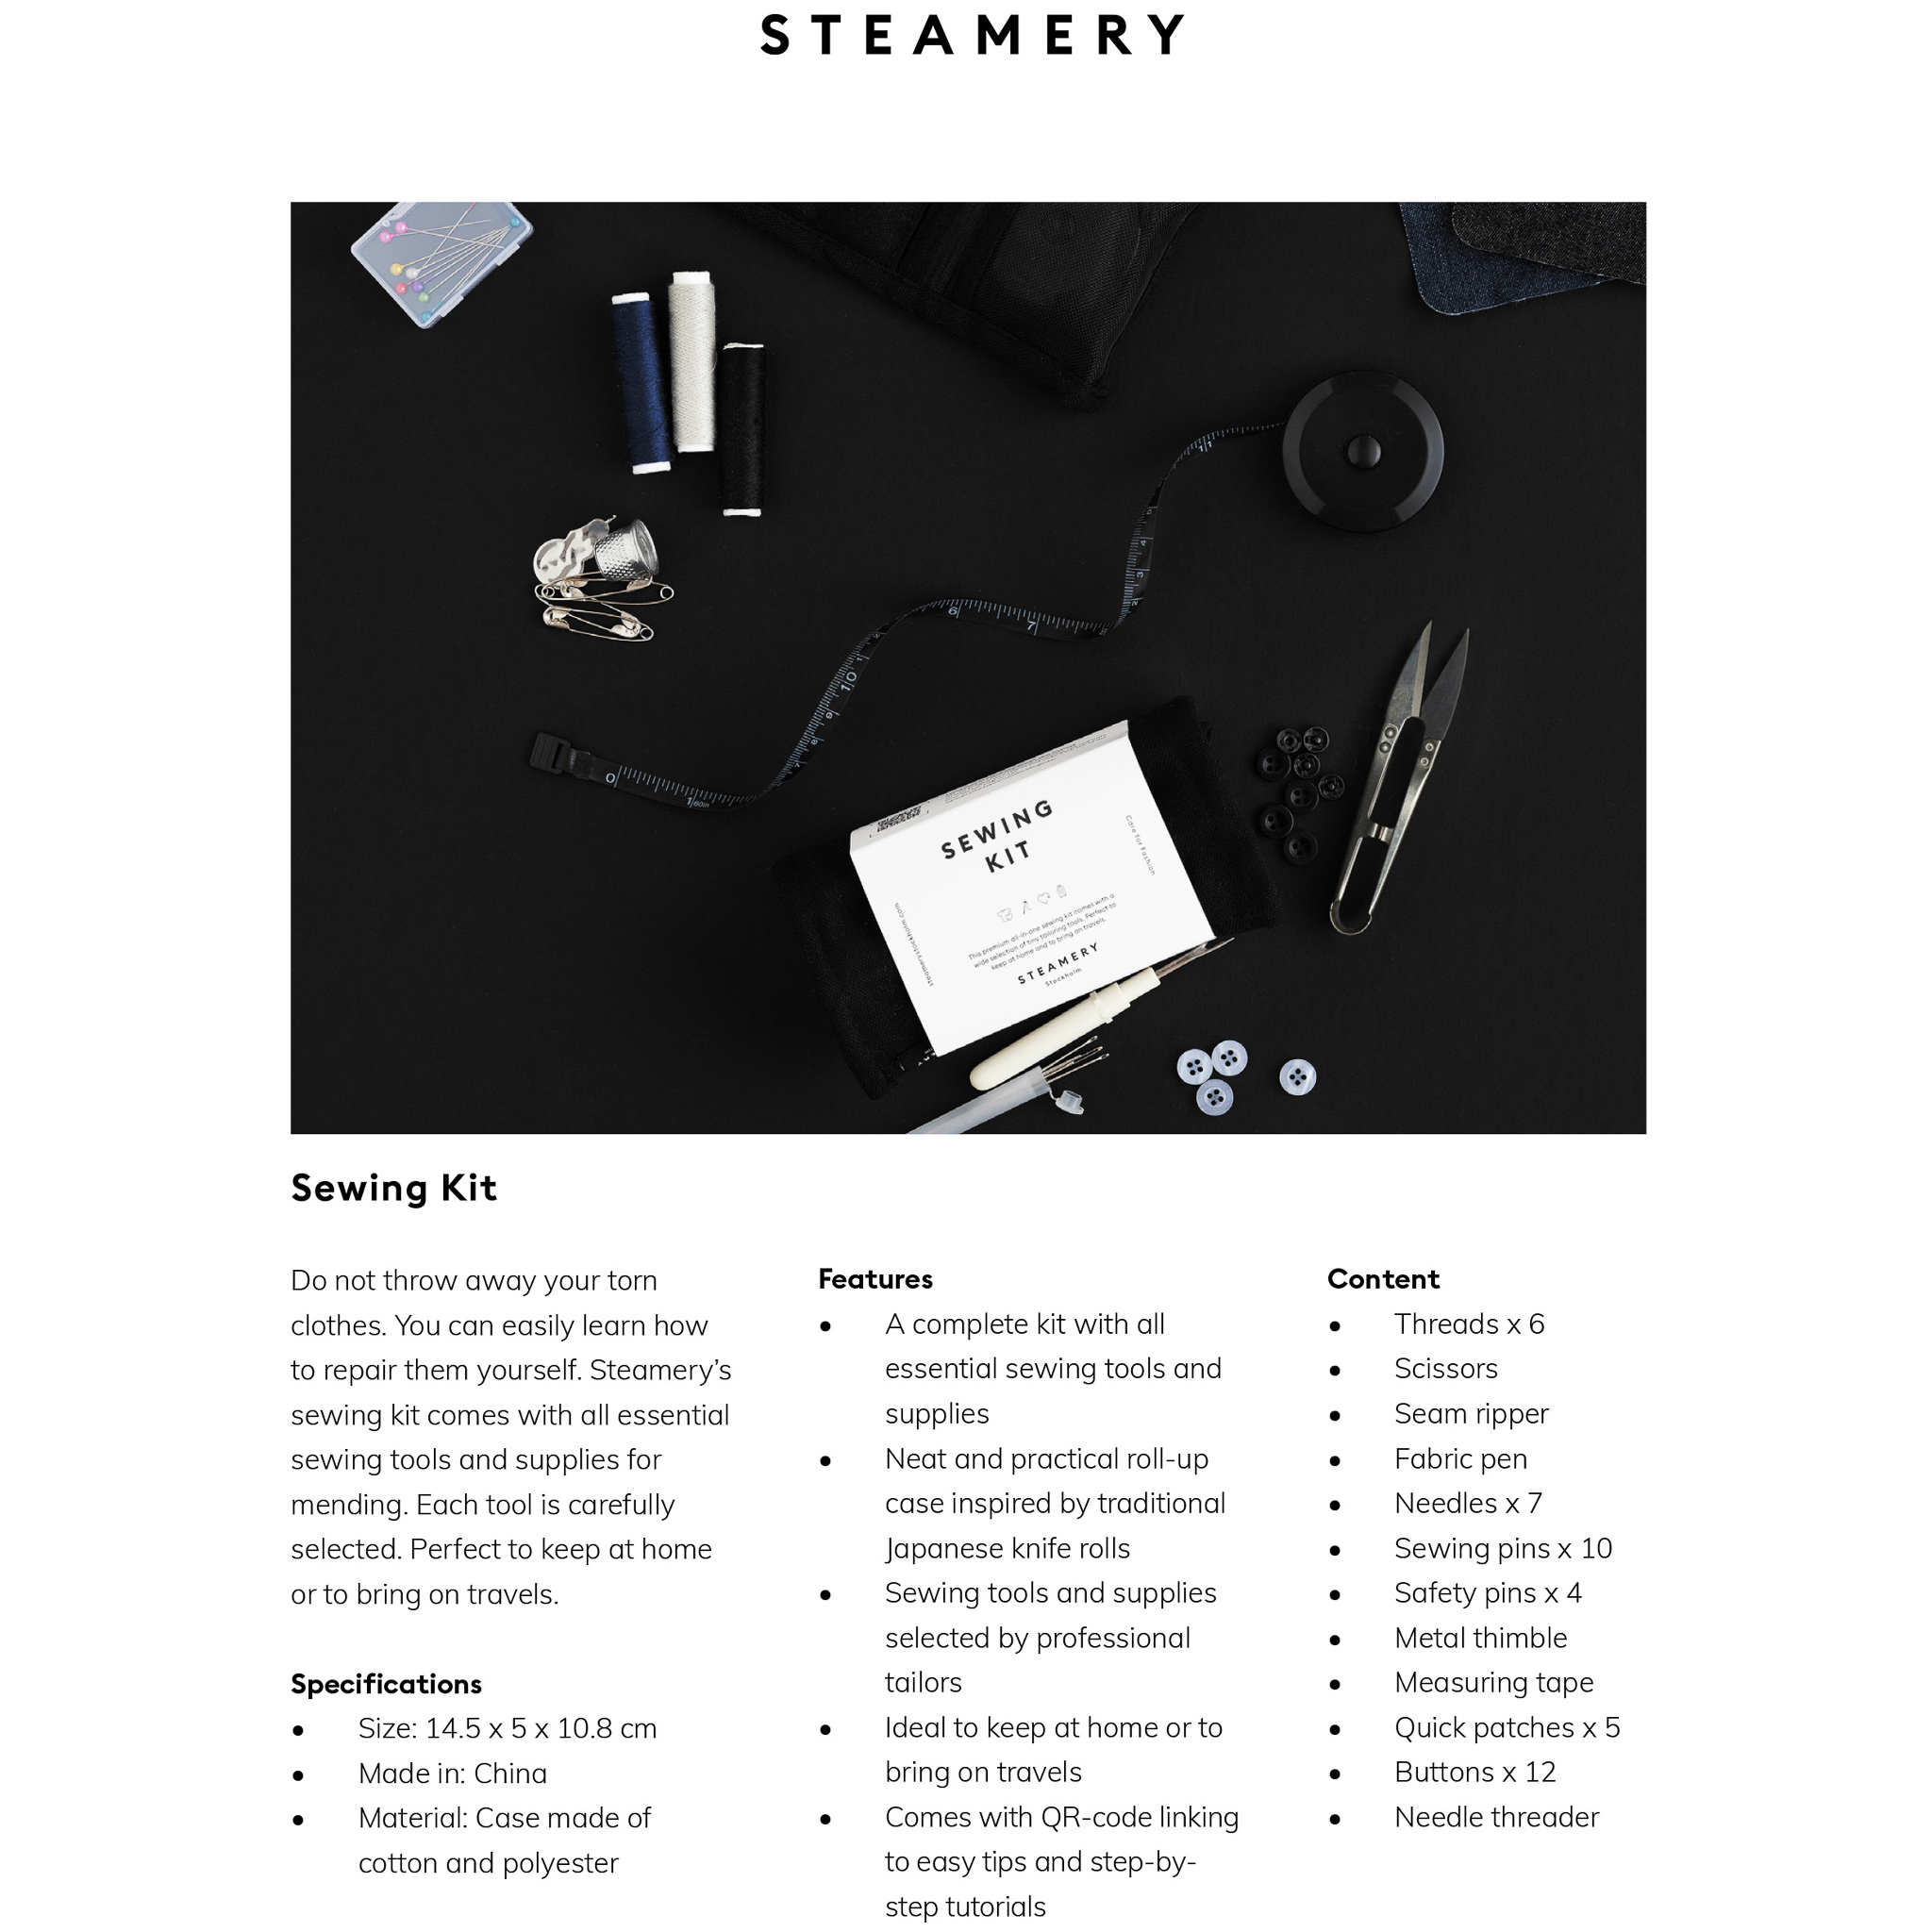 STEAMERY // SEWING KIT